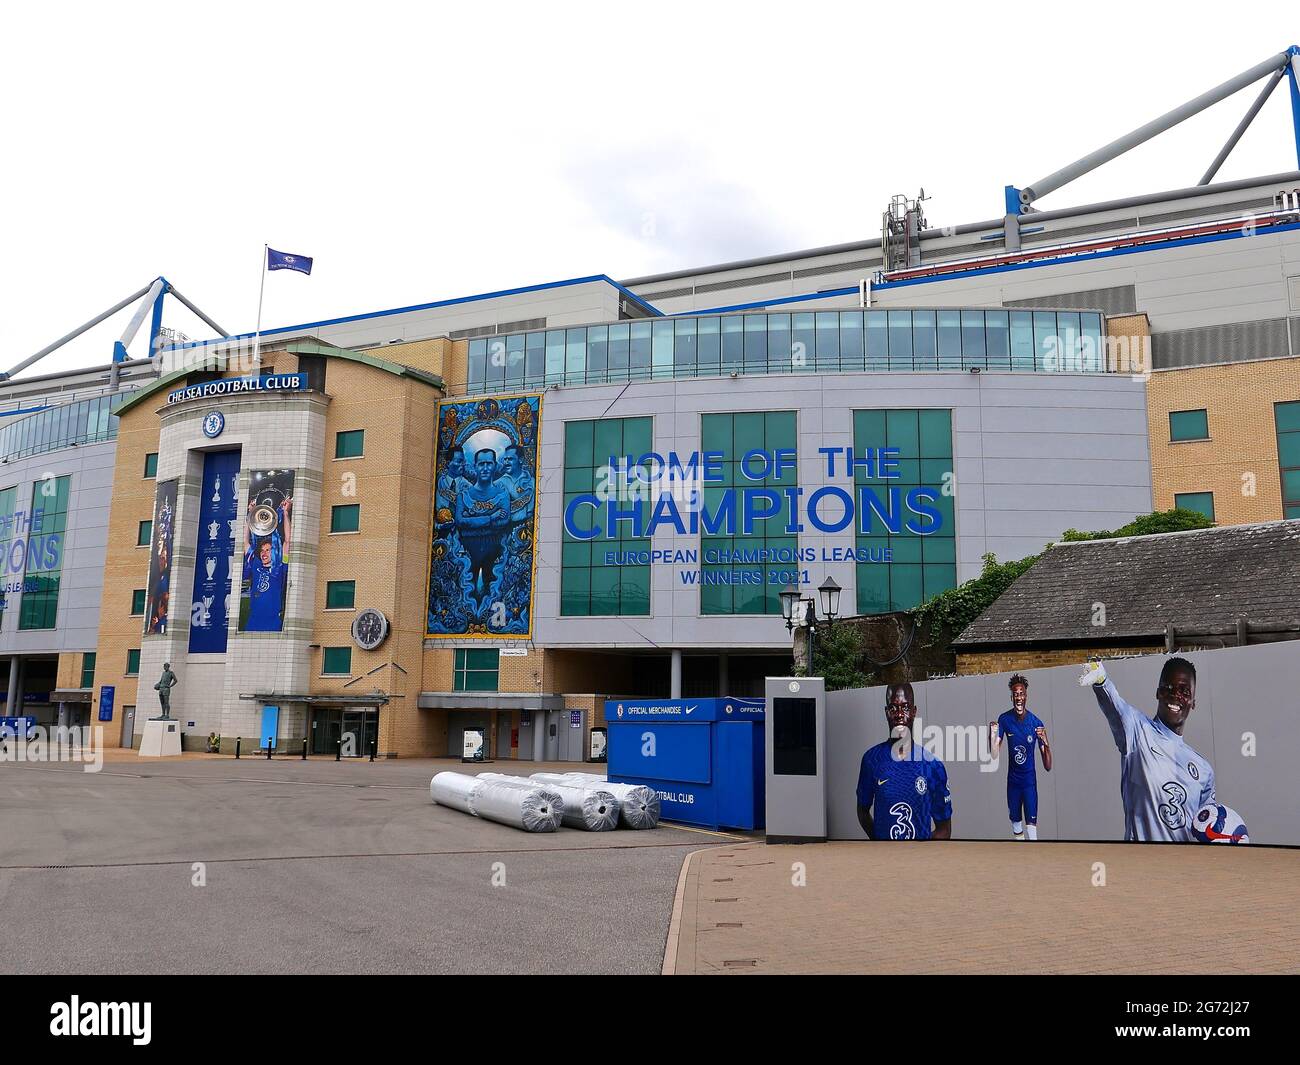 File:Chelsea Football Club, Stamford Bridge 12.jpg - Wikimedia Commons